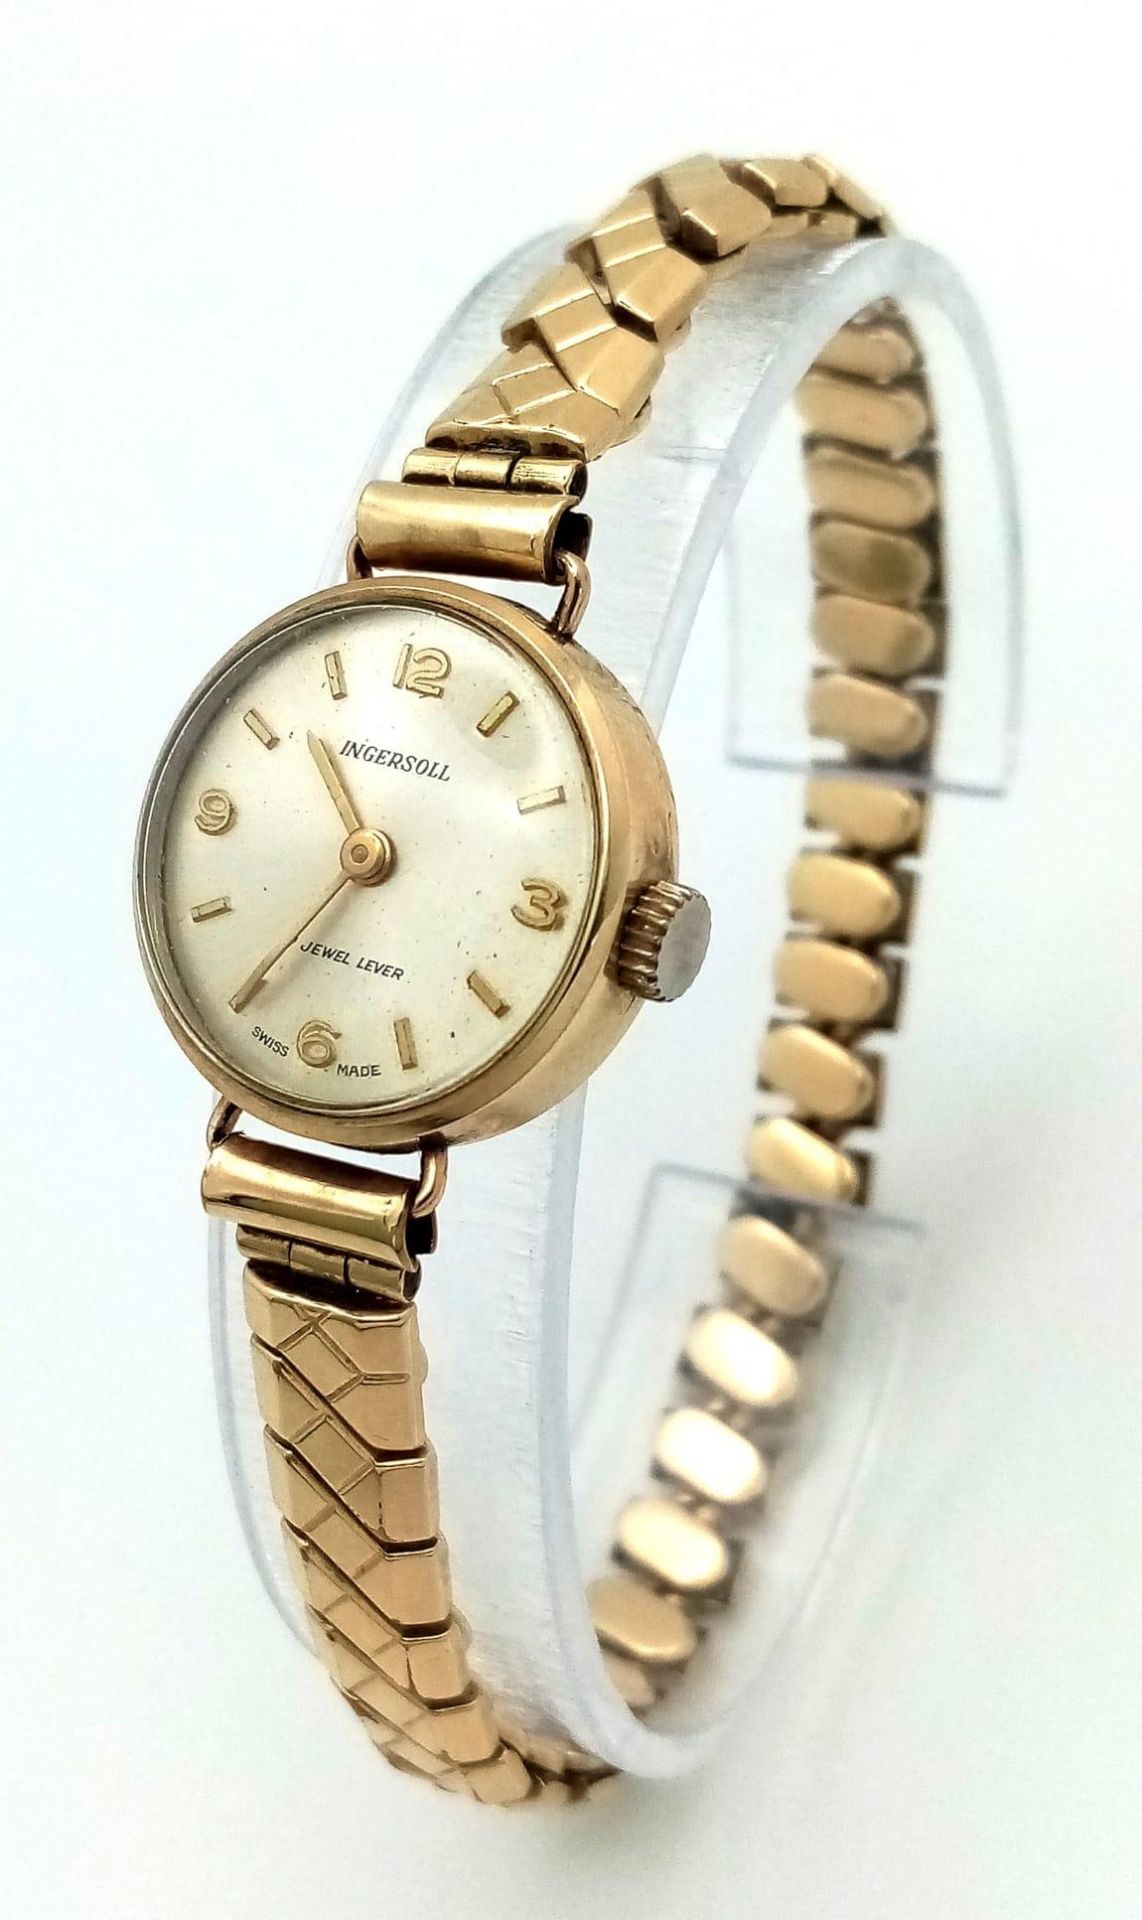 A Vintage 9K Gold Cased Ingersoll Ladies Watch. Rolled gold expandable bracelet. 9K gold case -